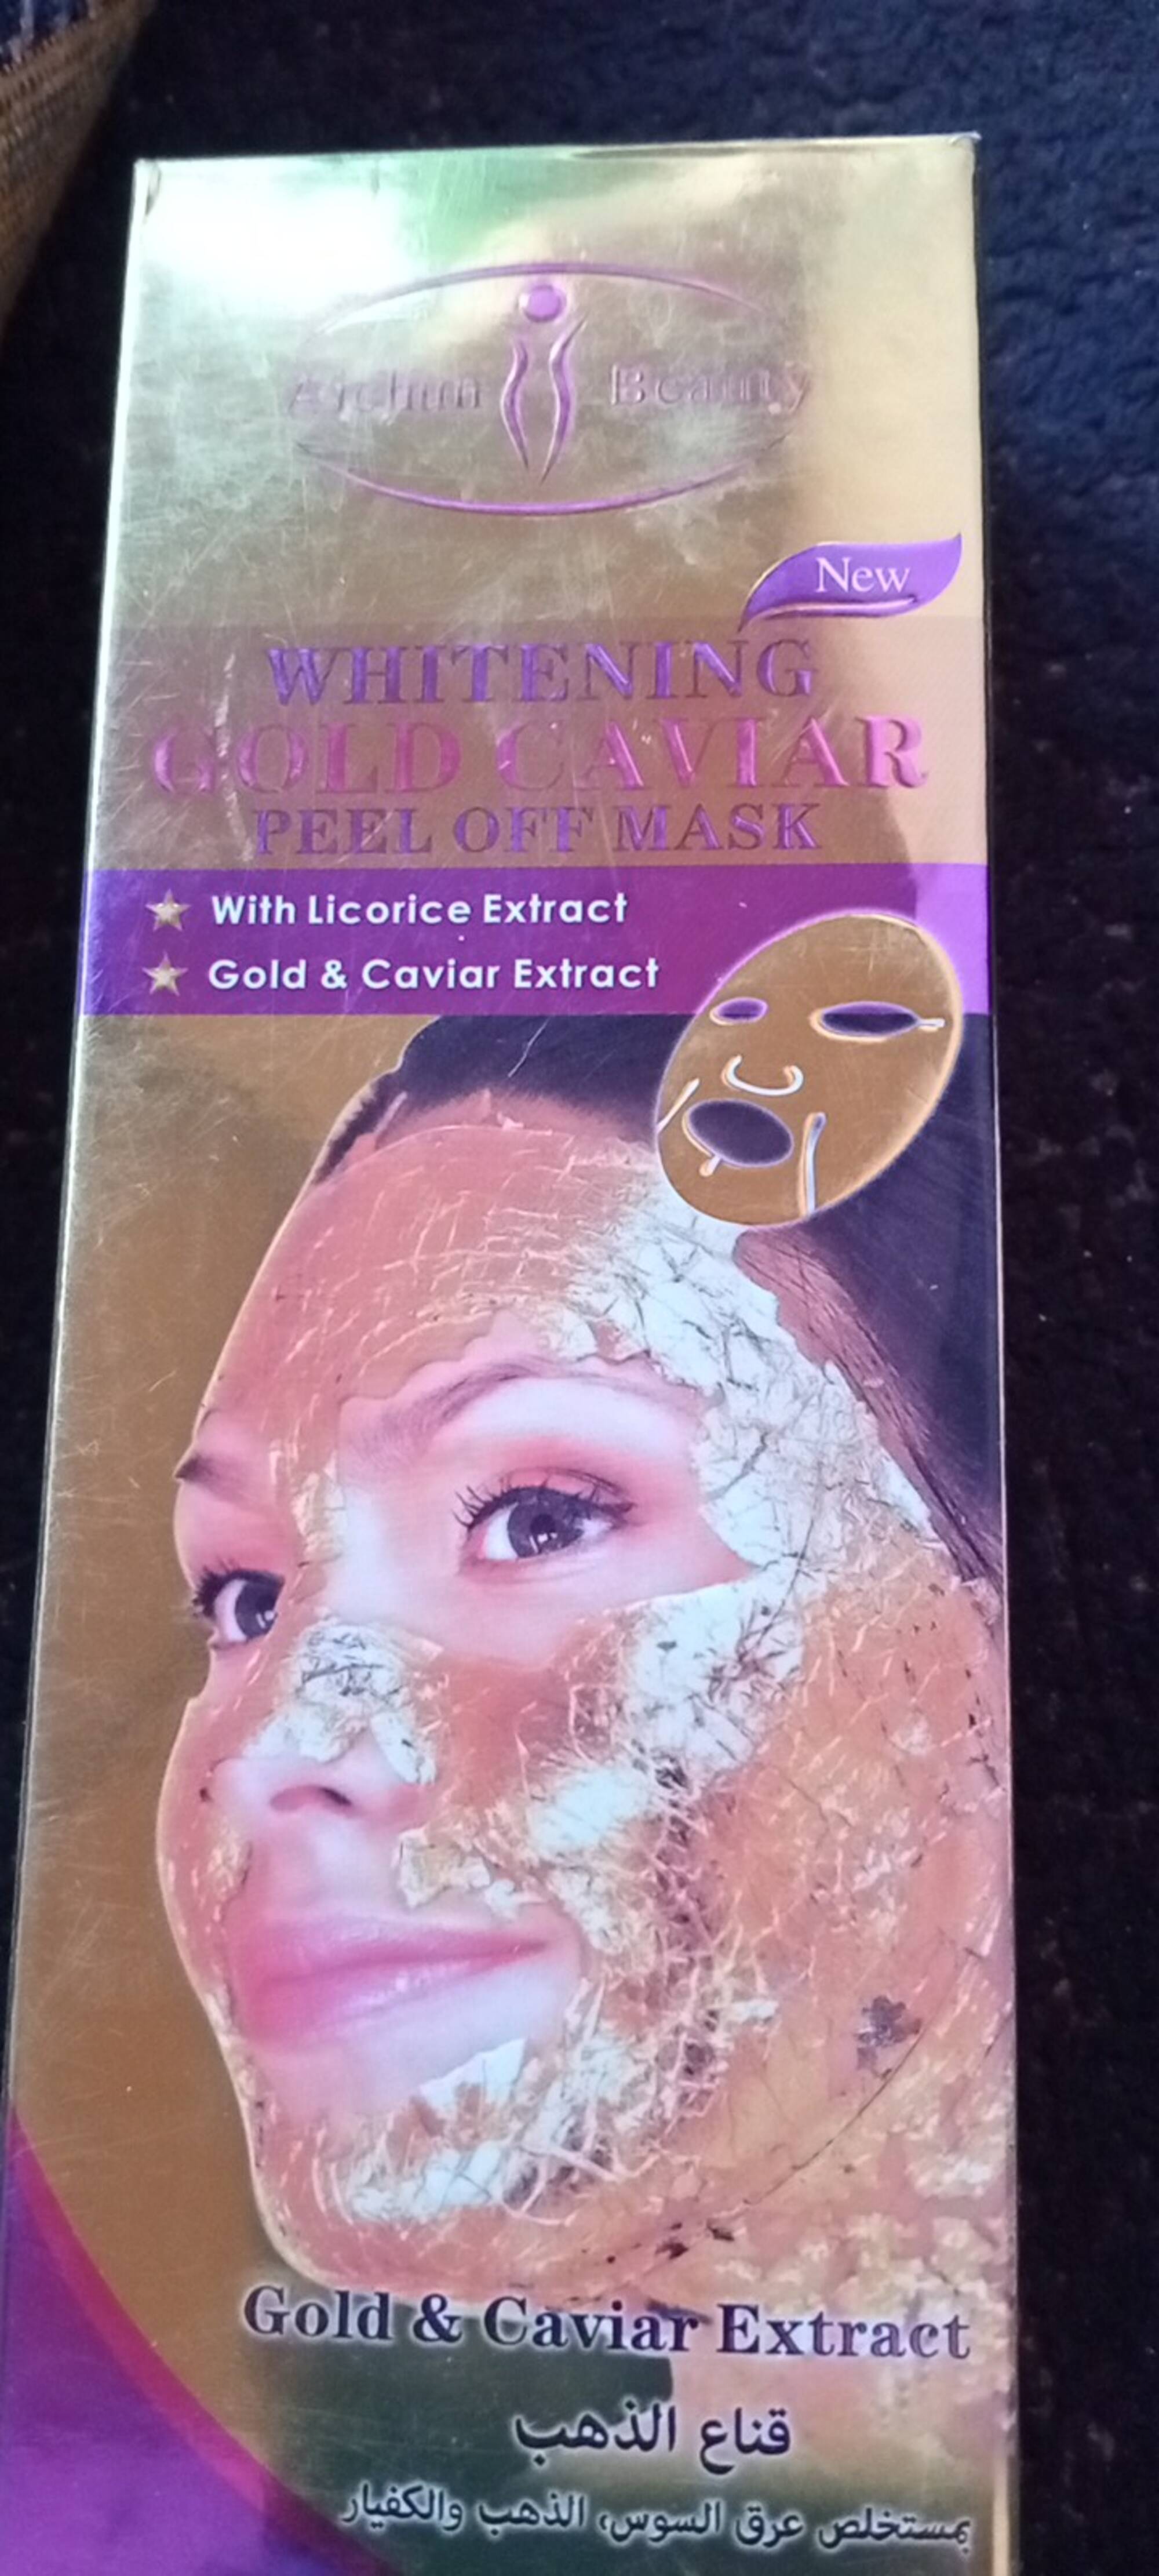 AICHUN BEAUTY - Whitening gold caviar - Peel off mask